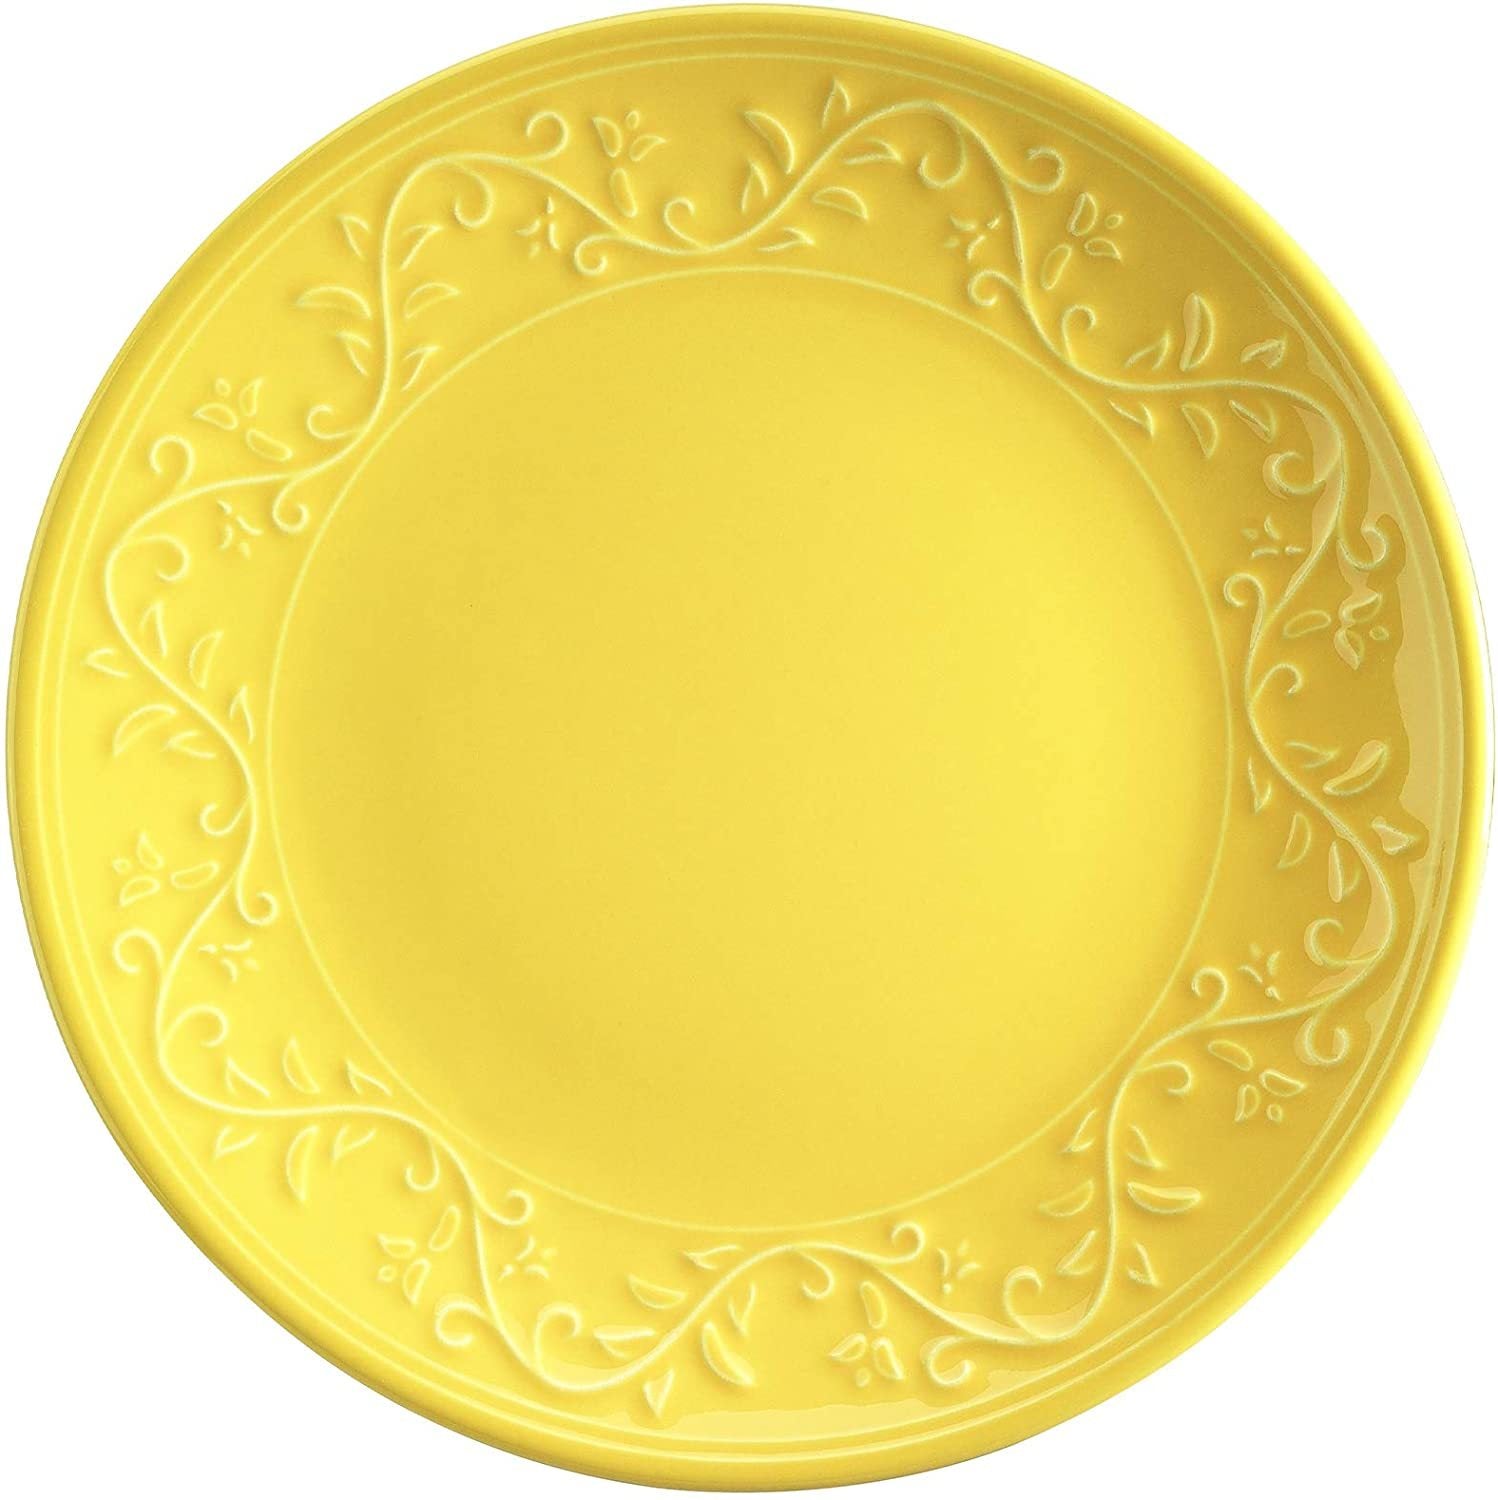 Fulya 16 Pieces Dinnerware Set yellow-porcelain